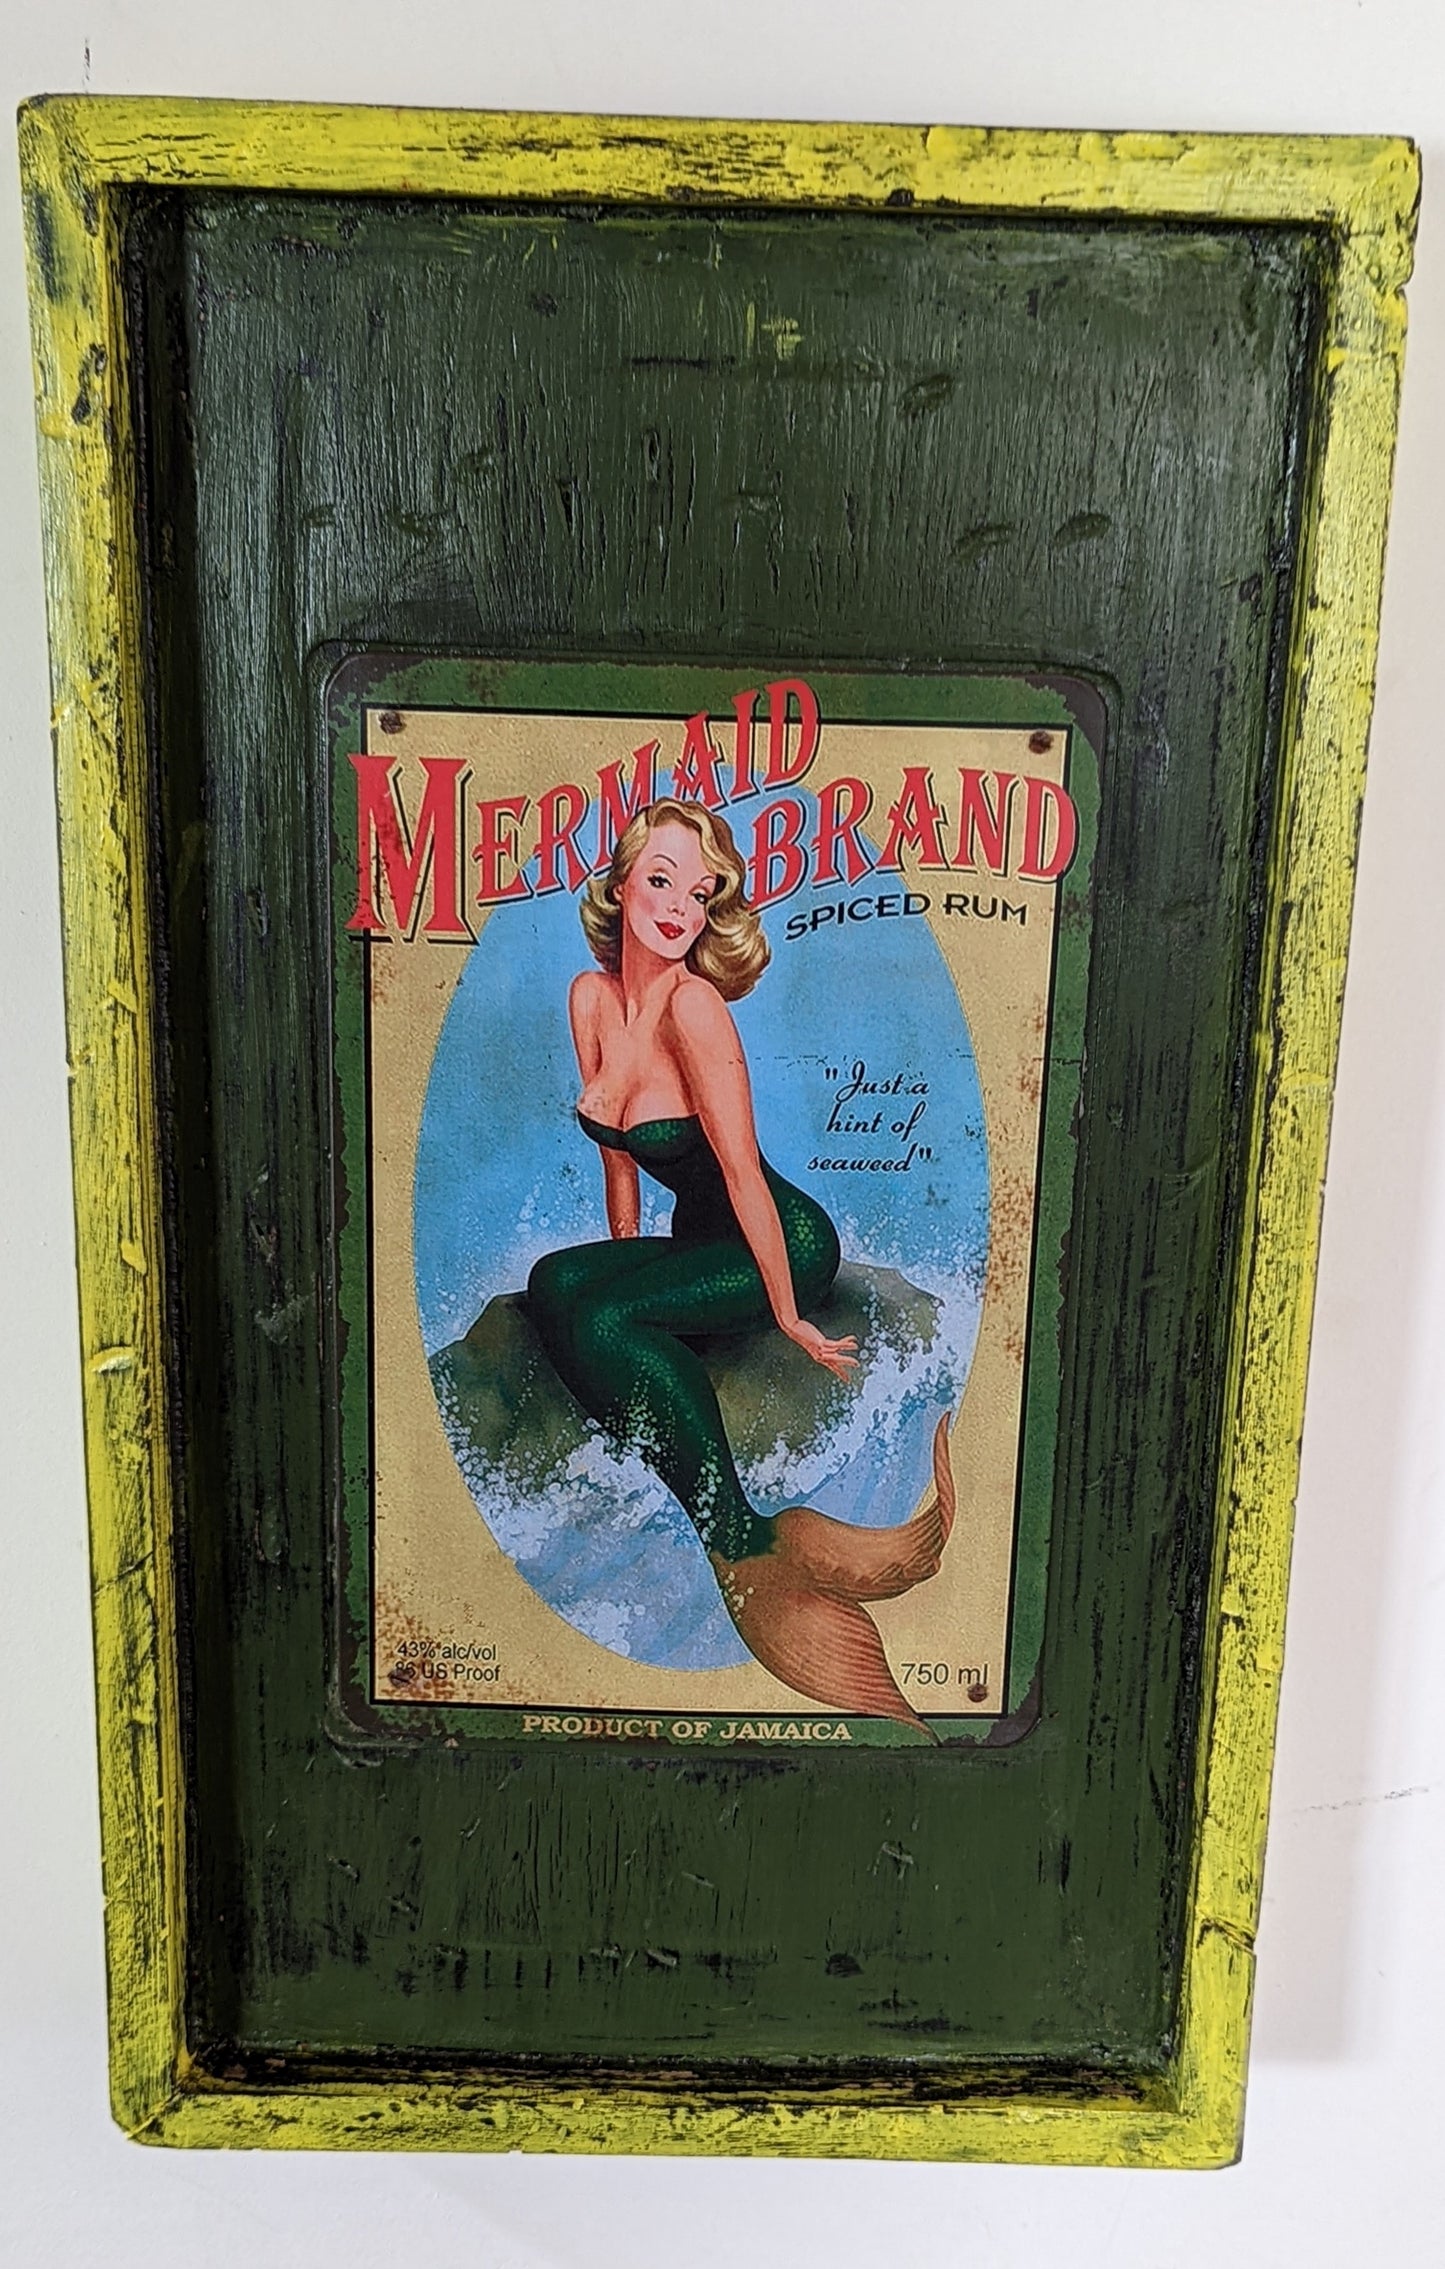 Rustic Vintage Sign Art Piece on Custom Distressed Wood Mermaid Brand Spiced Rum Sign One of a kind Handmade Art Piece